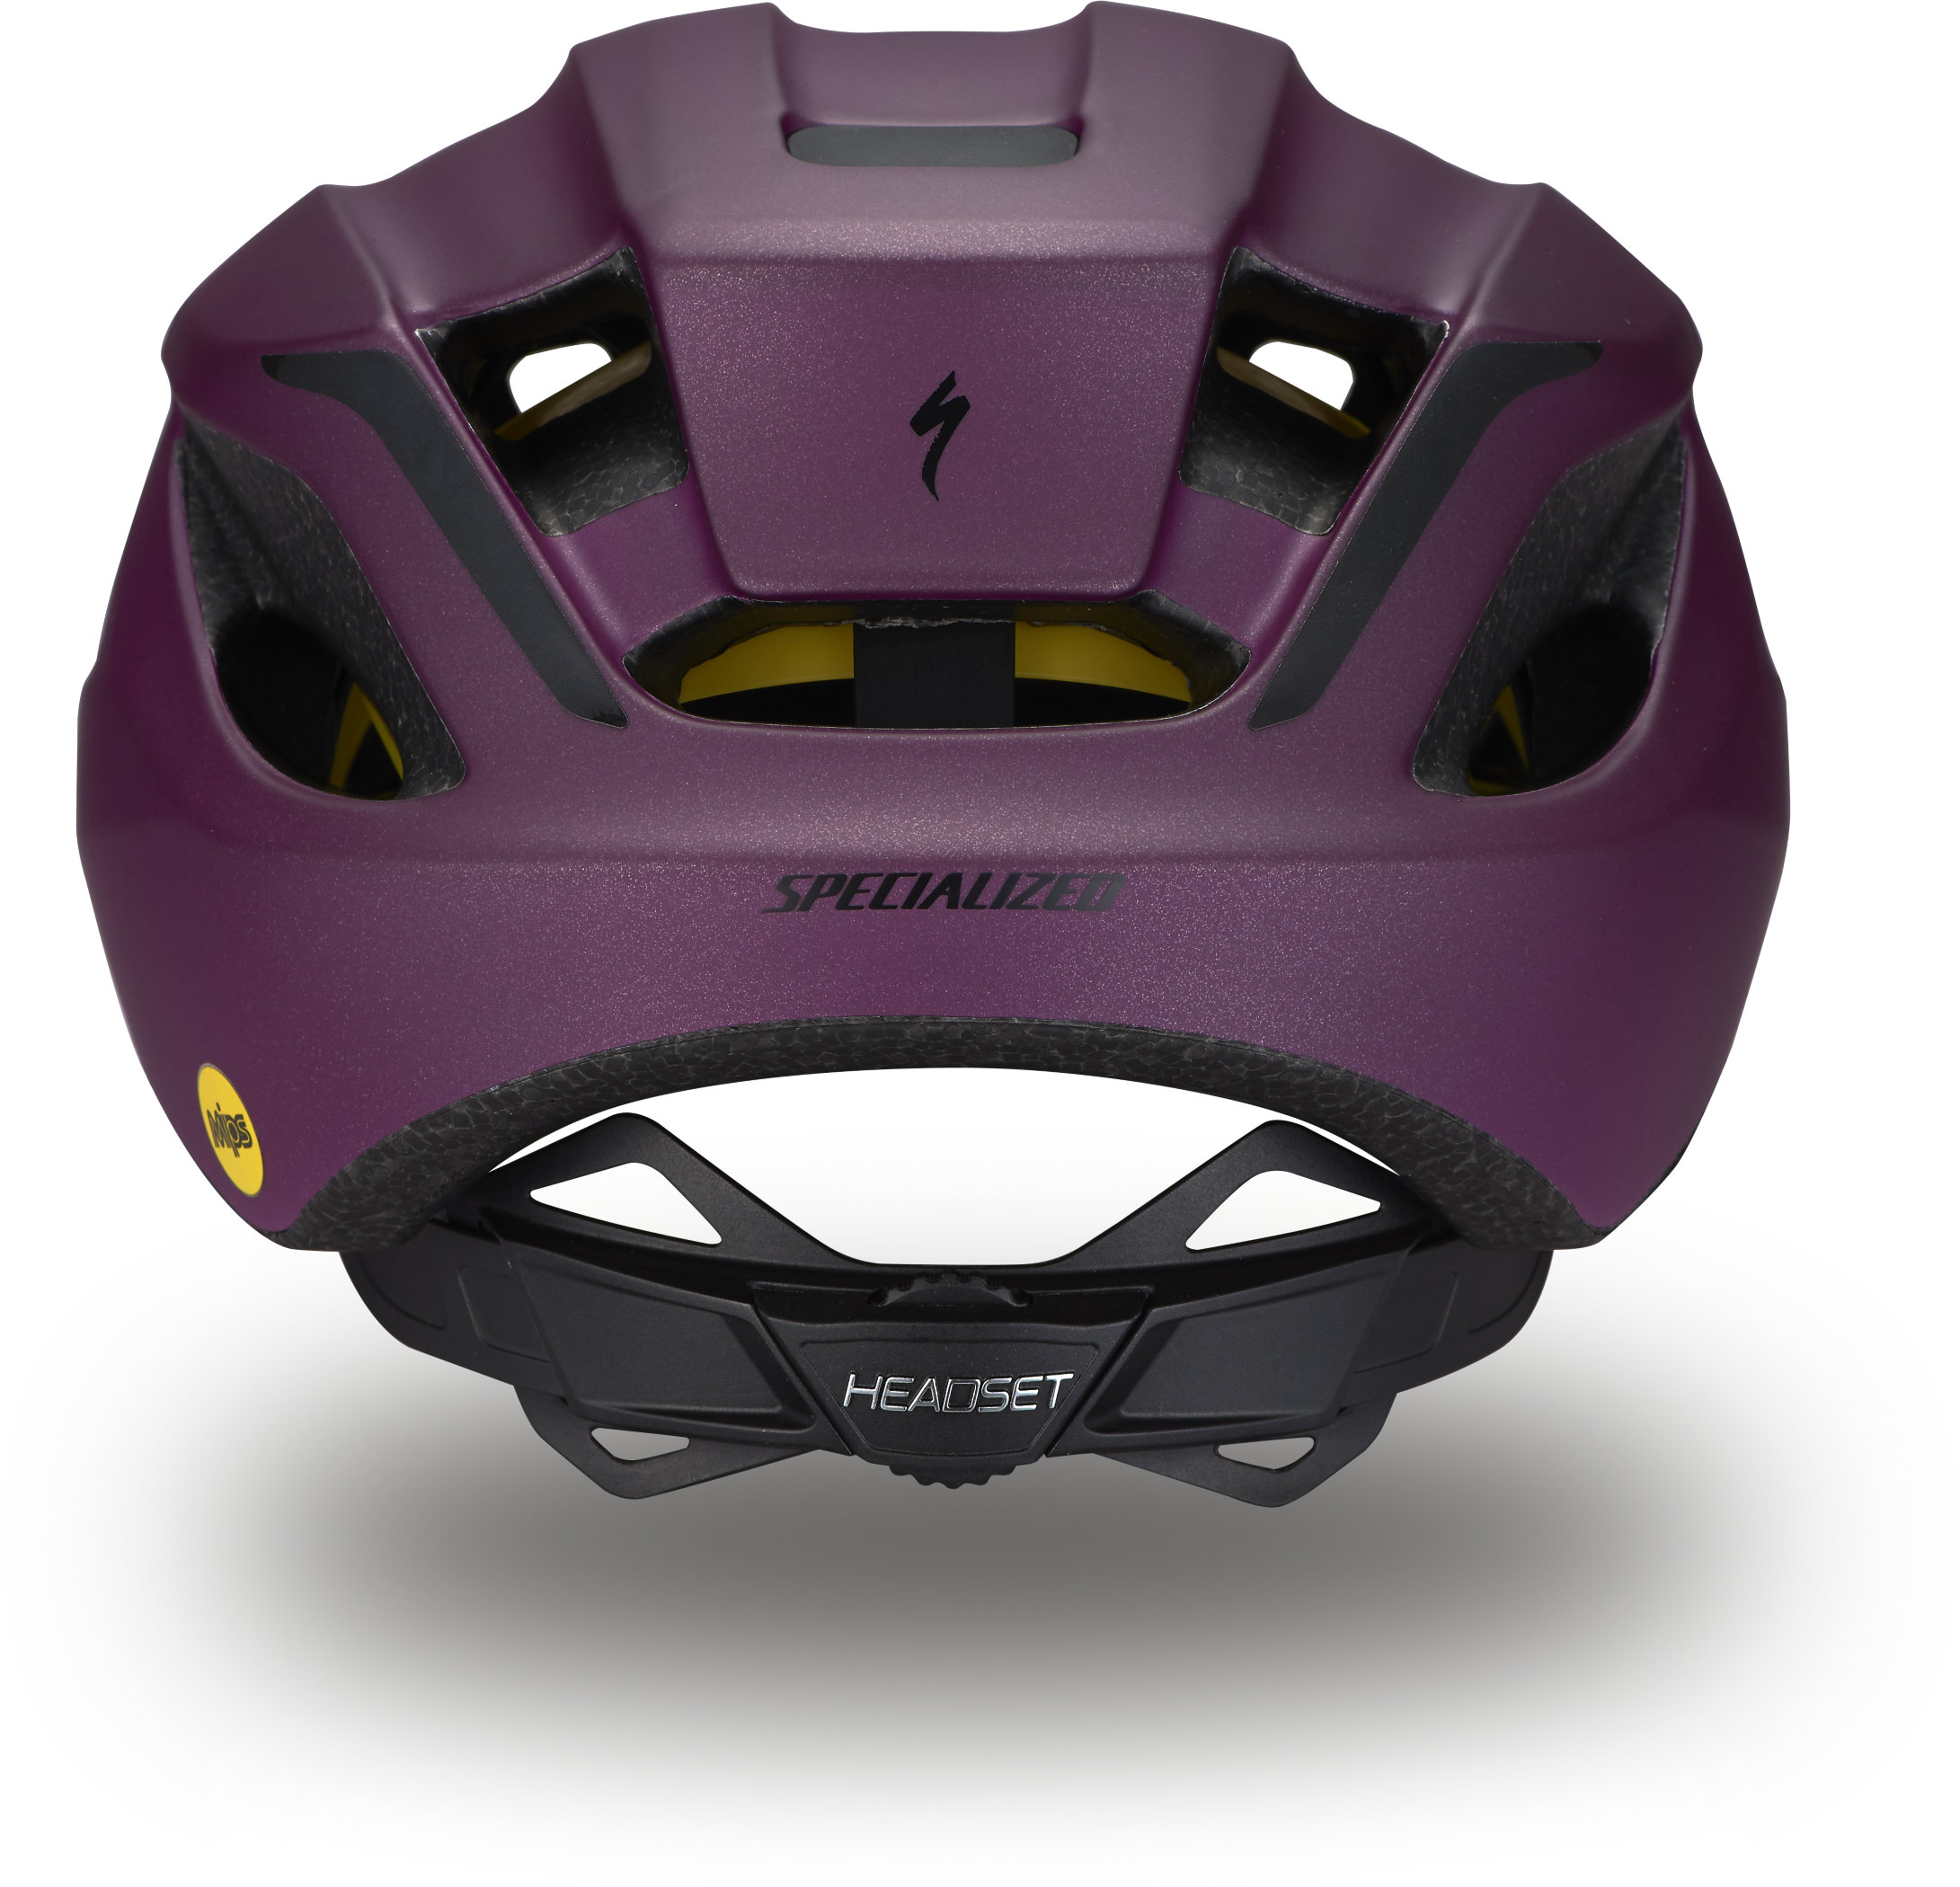 specialized align bike helmet